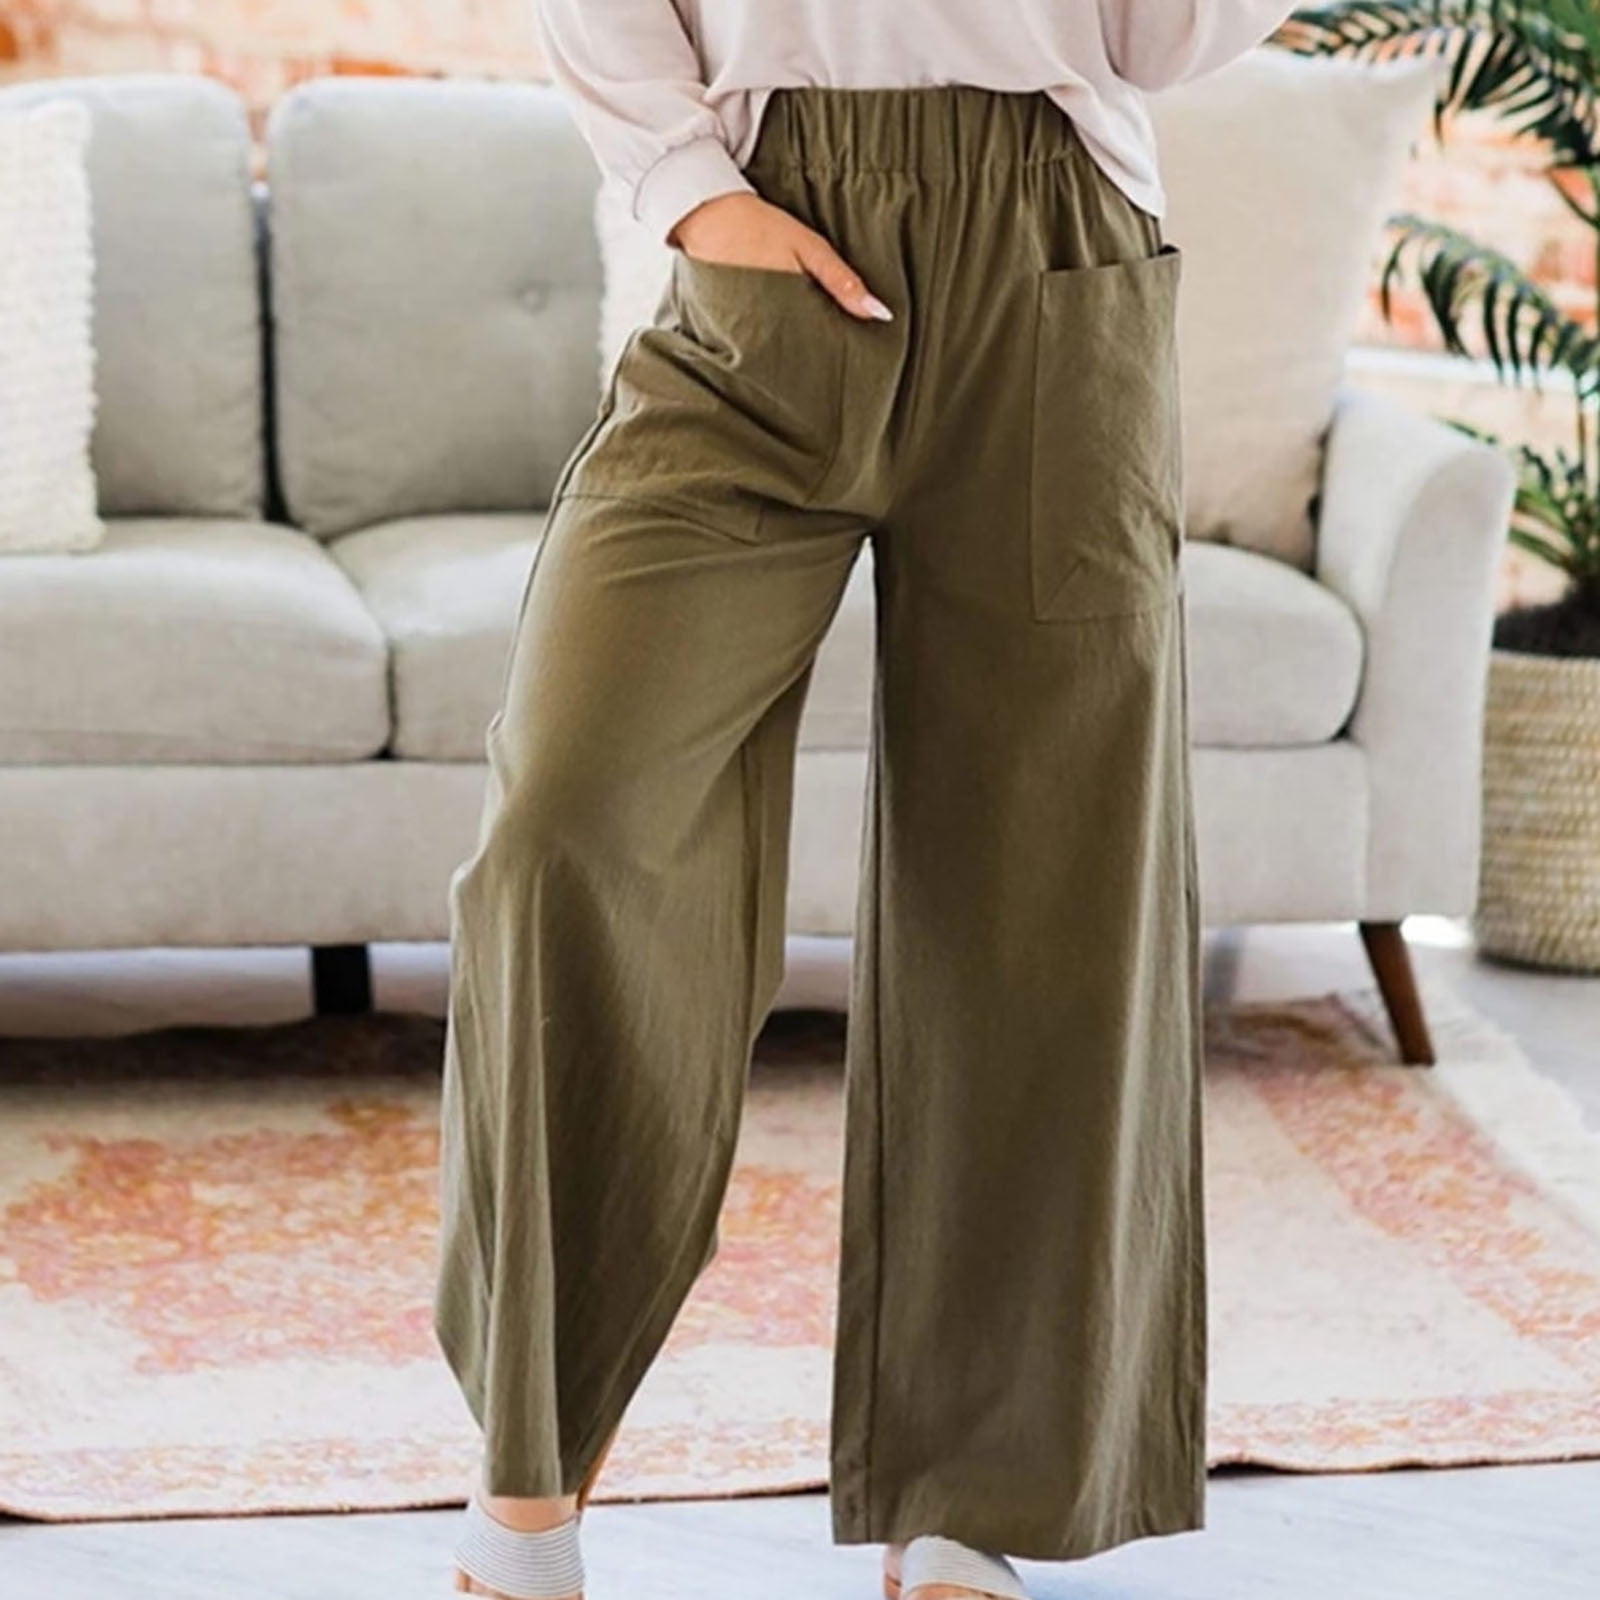 Shop Women's Damart Trousers up to 75% Off | DealDoodle